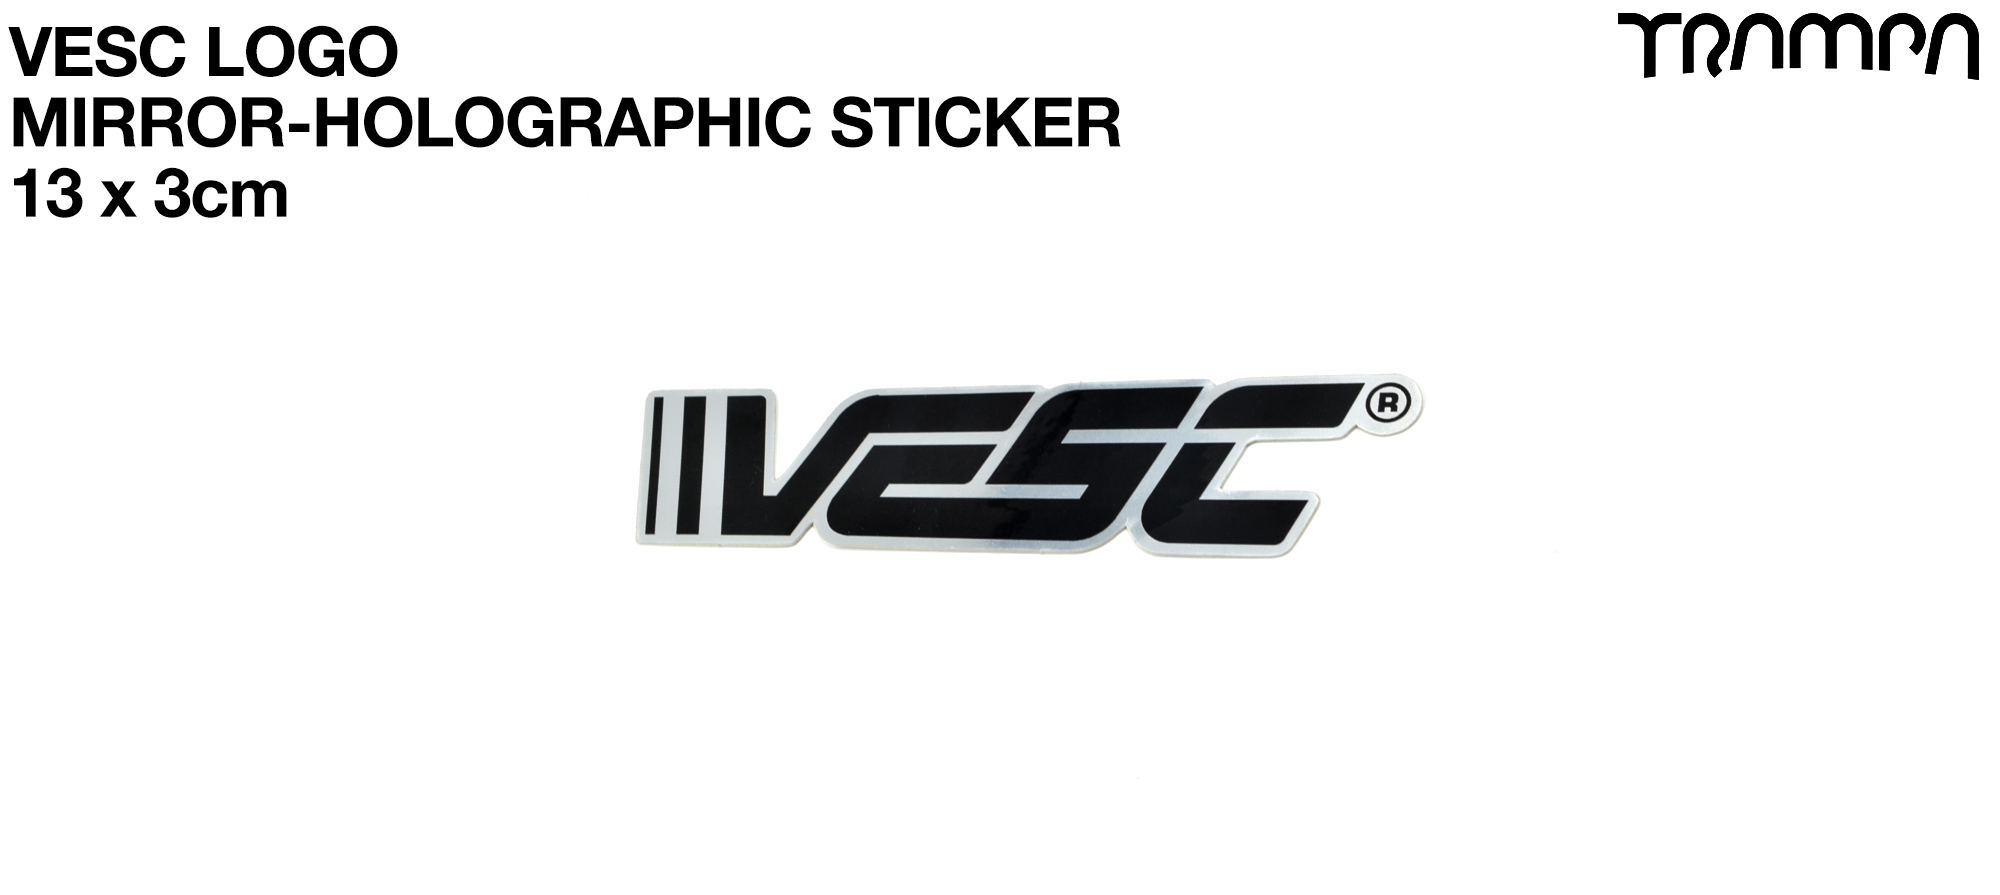 2x Holographic VESC Sticker 